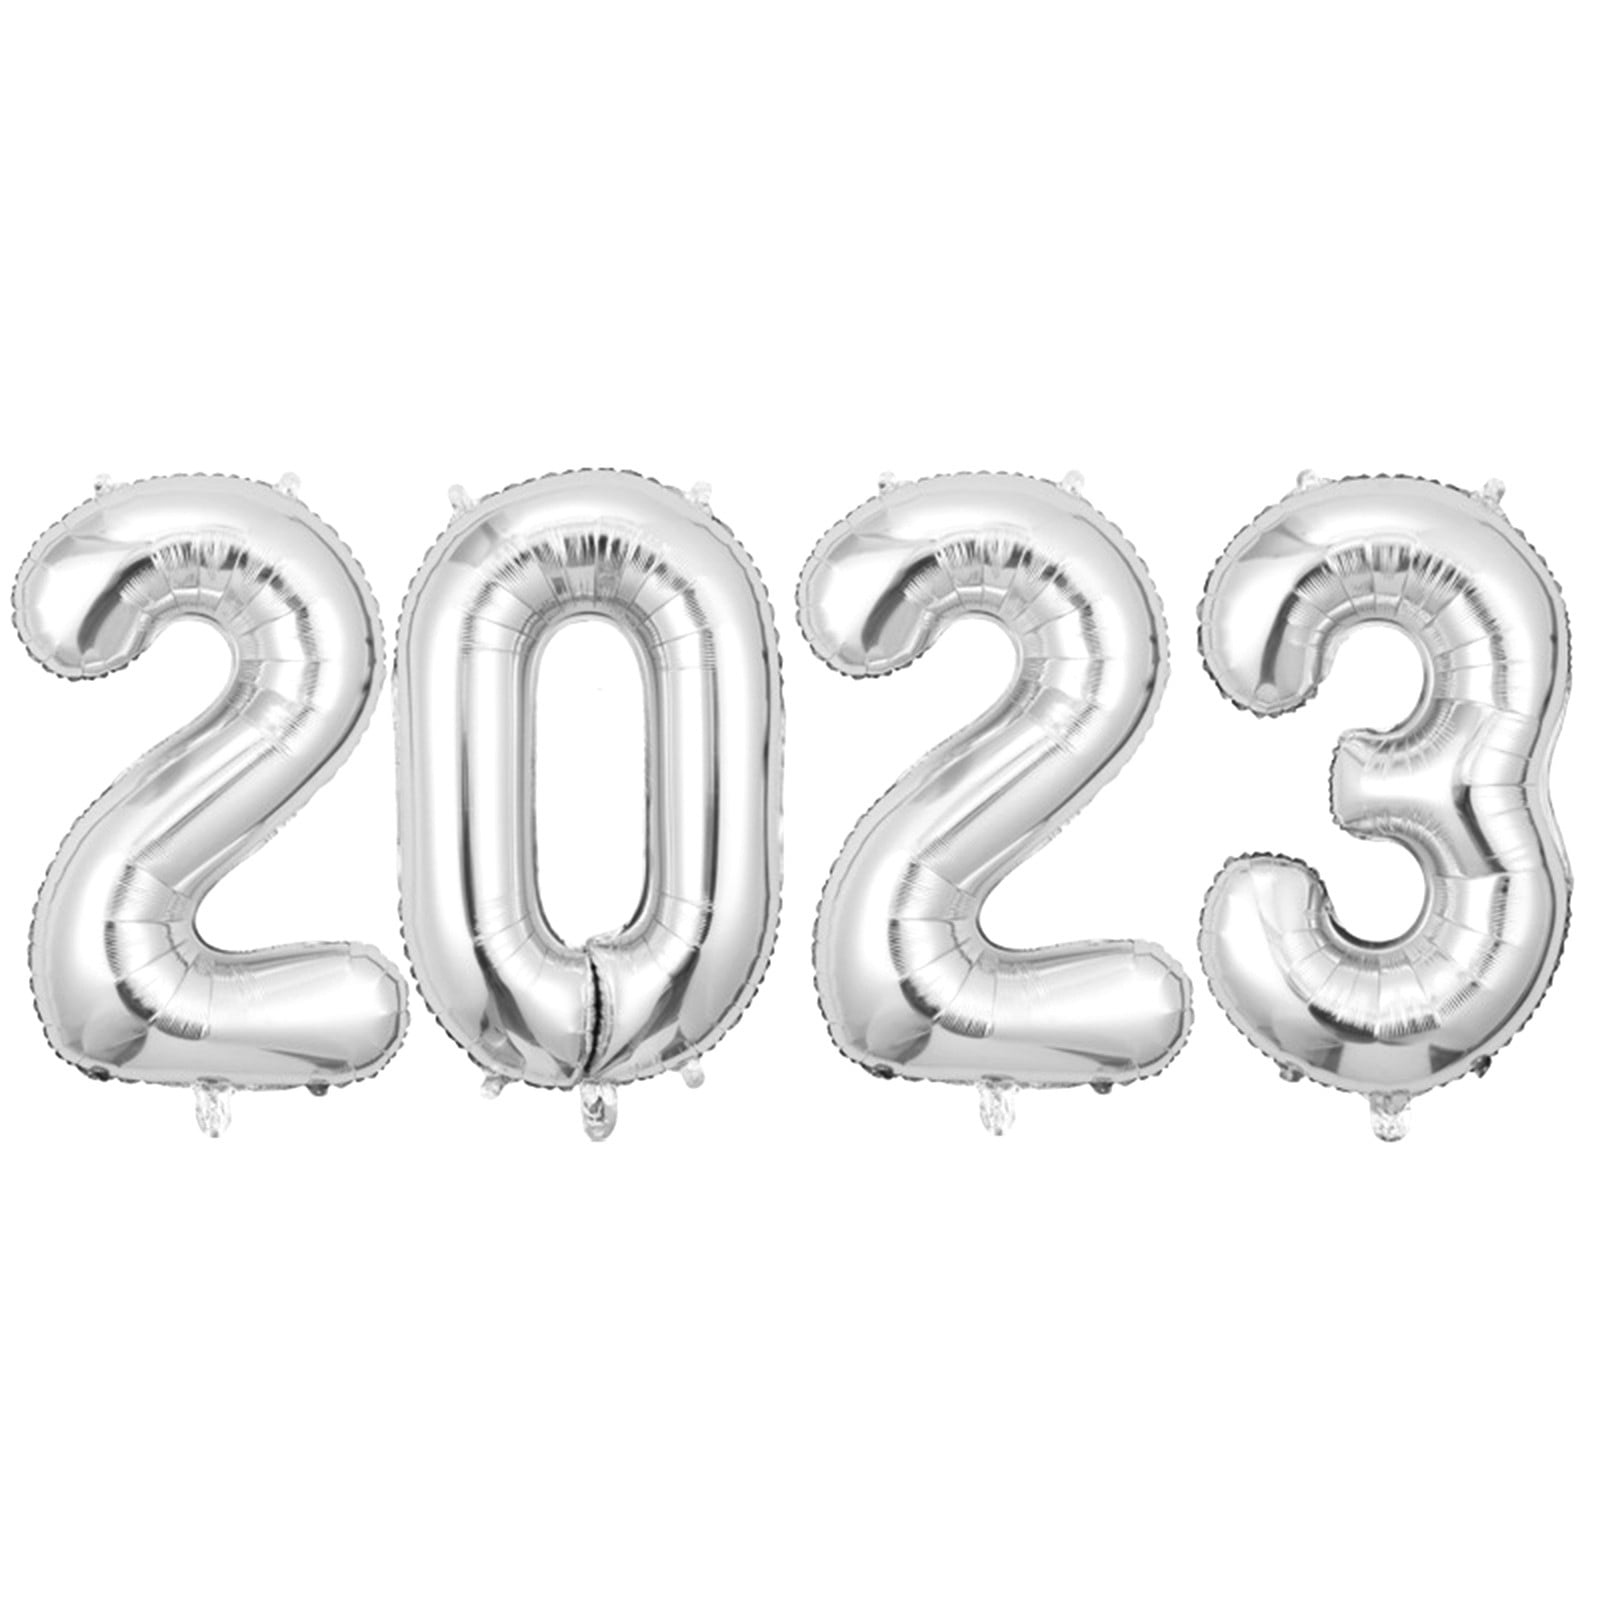 PMU Balloon Release - Reusable Balloon Netting - Balloon Drop Release for  Birthday Celebration, Graduation, New Year's Eve Party Supplies, EZ 500 &  Balloons (1) 135-80515, (5) L09-9010-100 